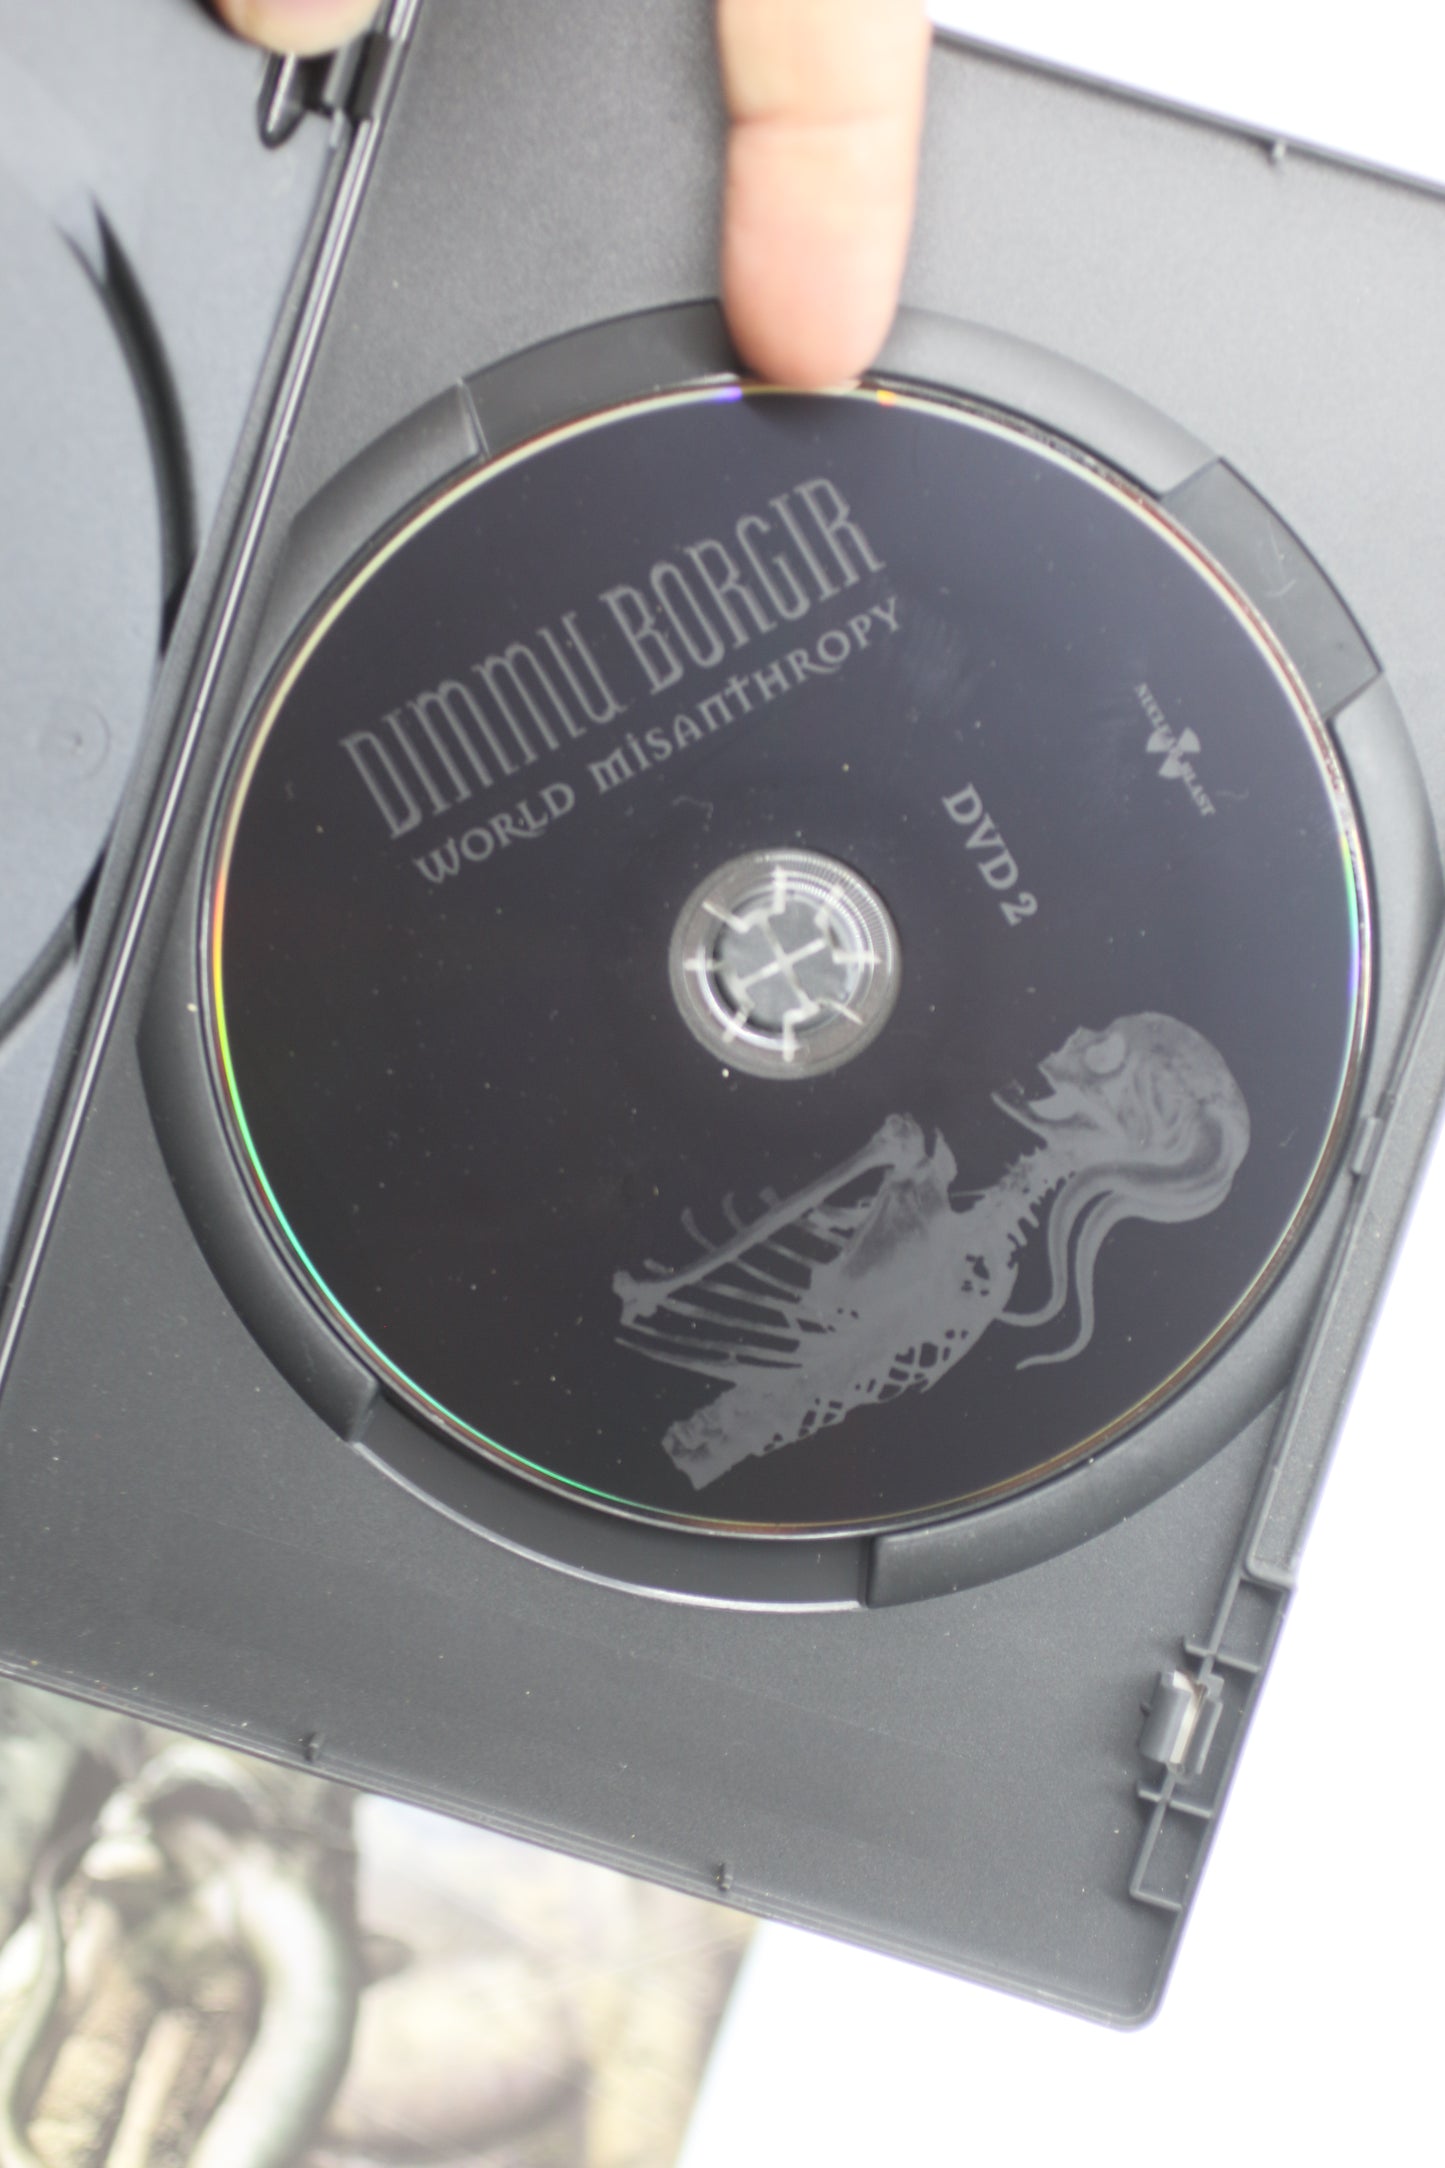 World Misanthropy by Dimmu Borgir DVD 2-Disc SET 2002 Live Metal Music DVD